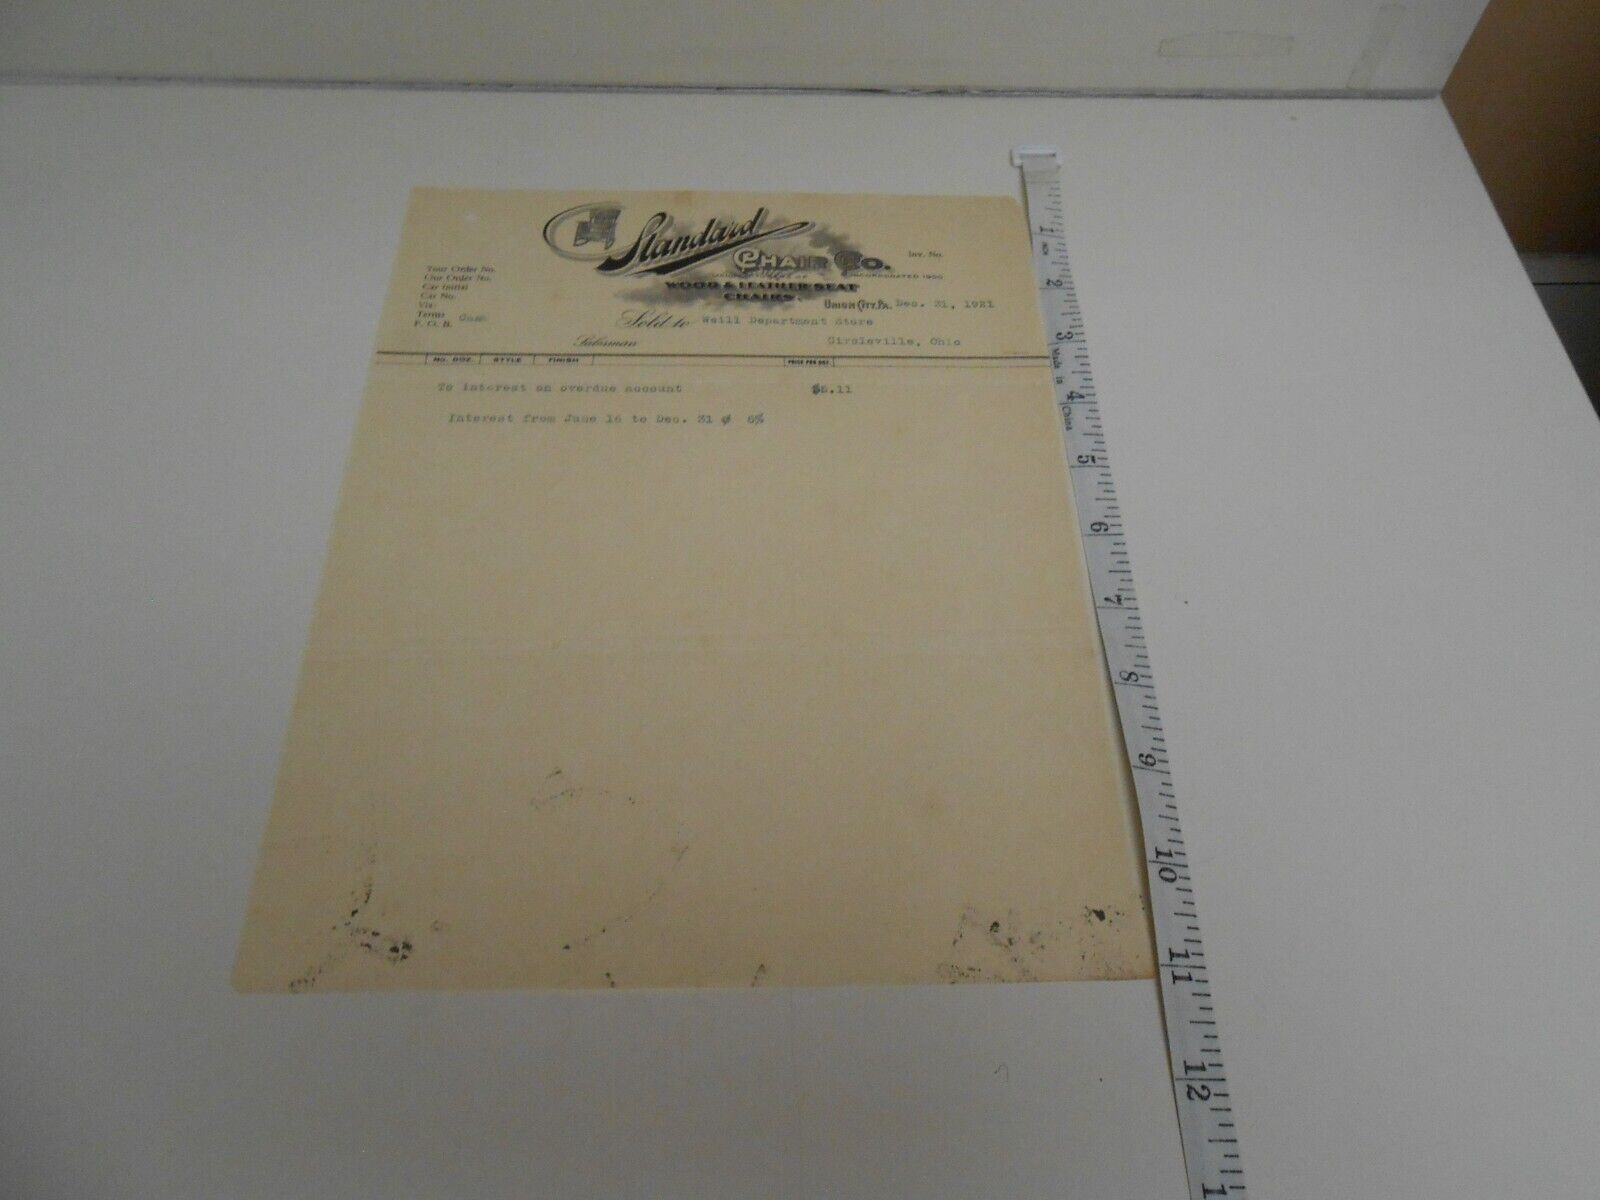 1921 Union City, Pennsylvania Business Letter (Interest Owed) Standard Chair Co